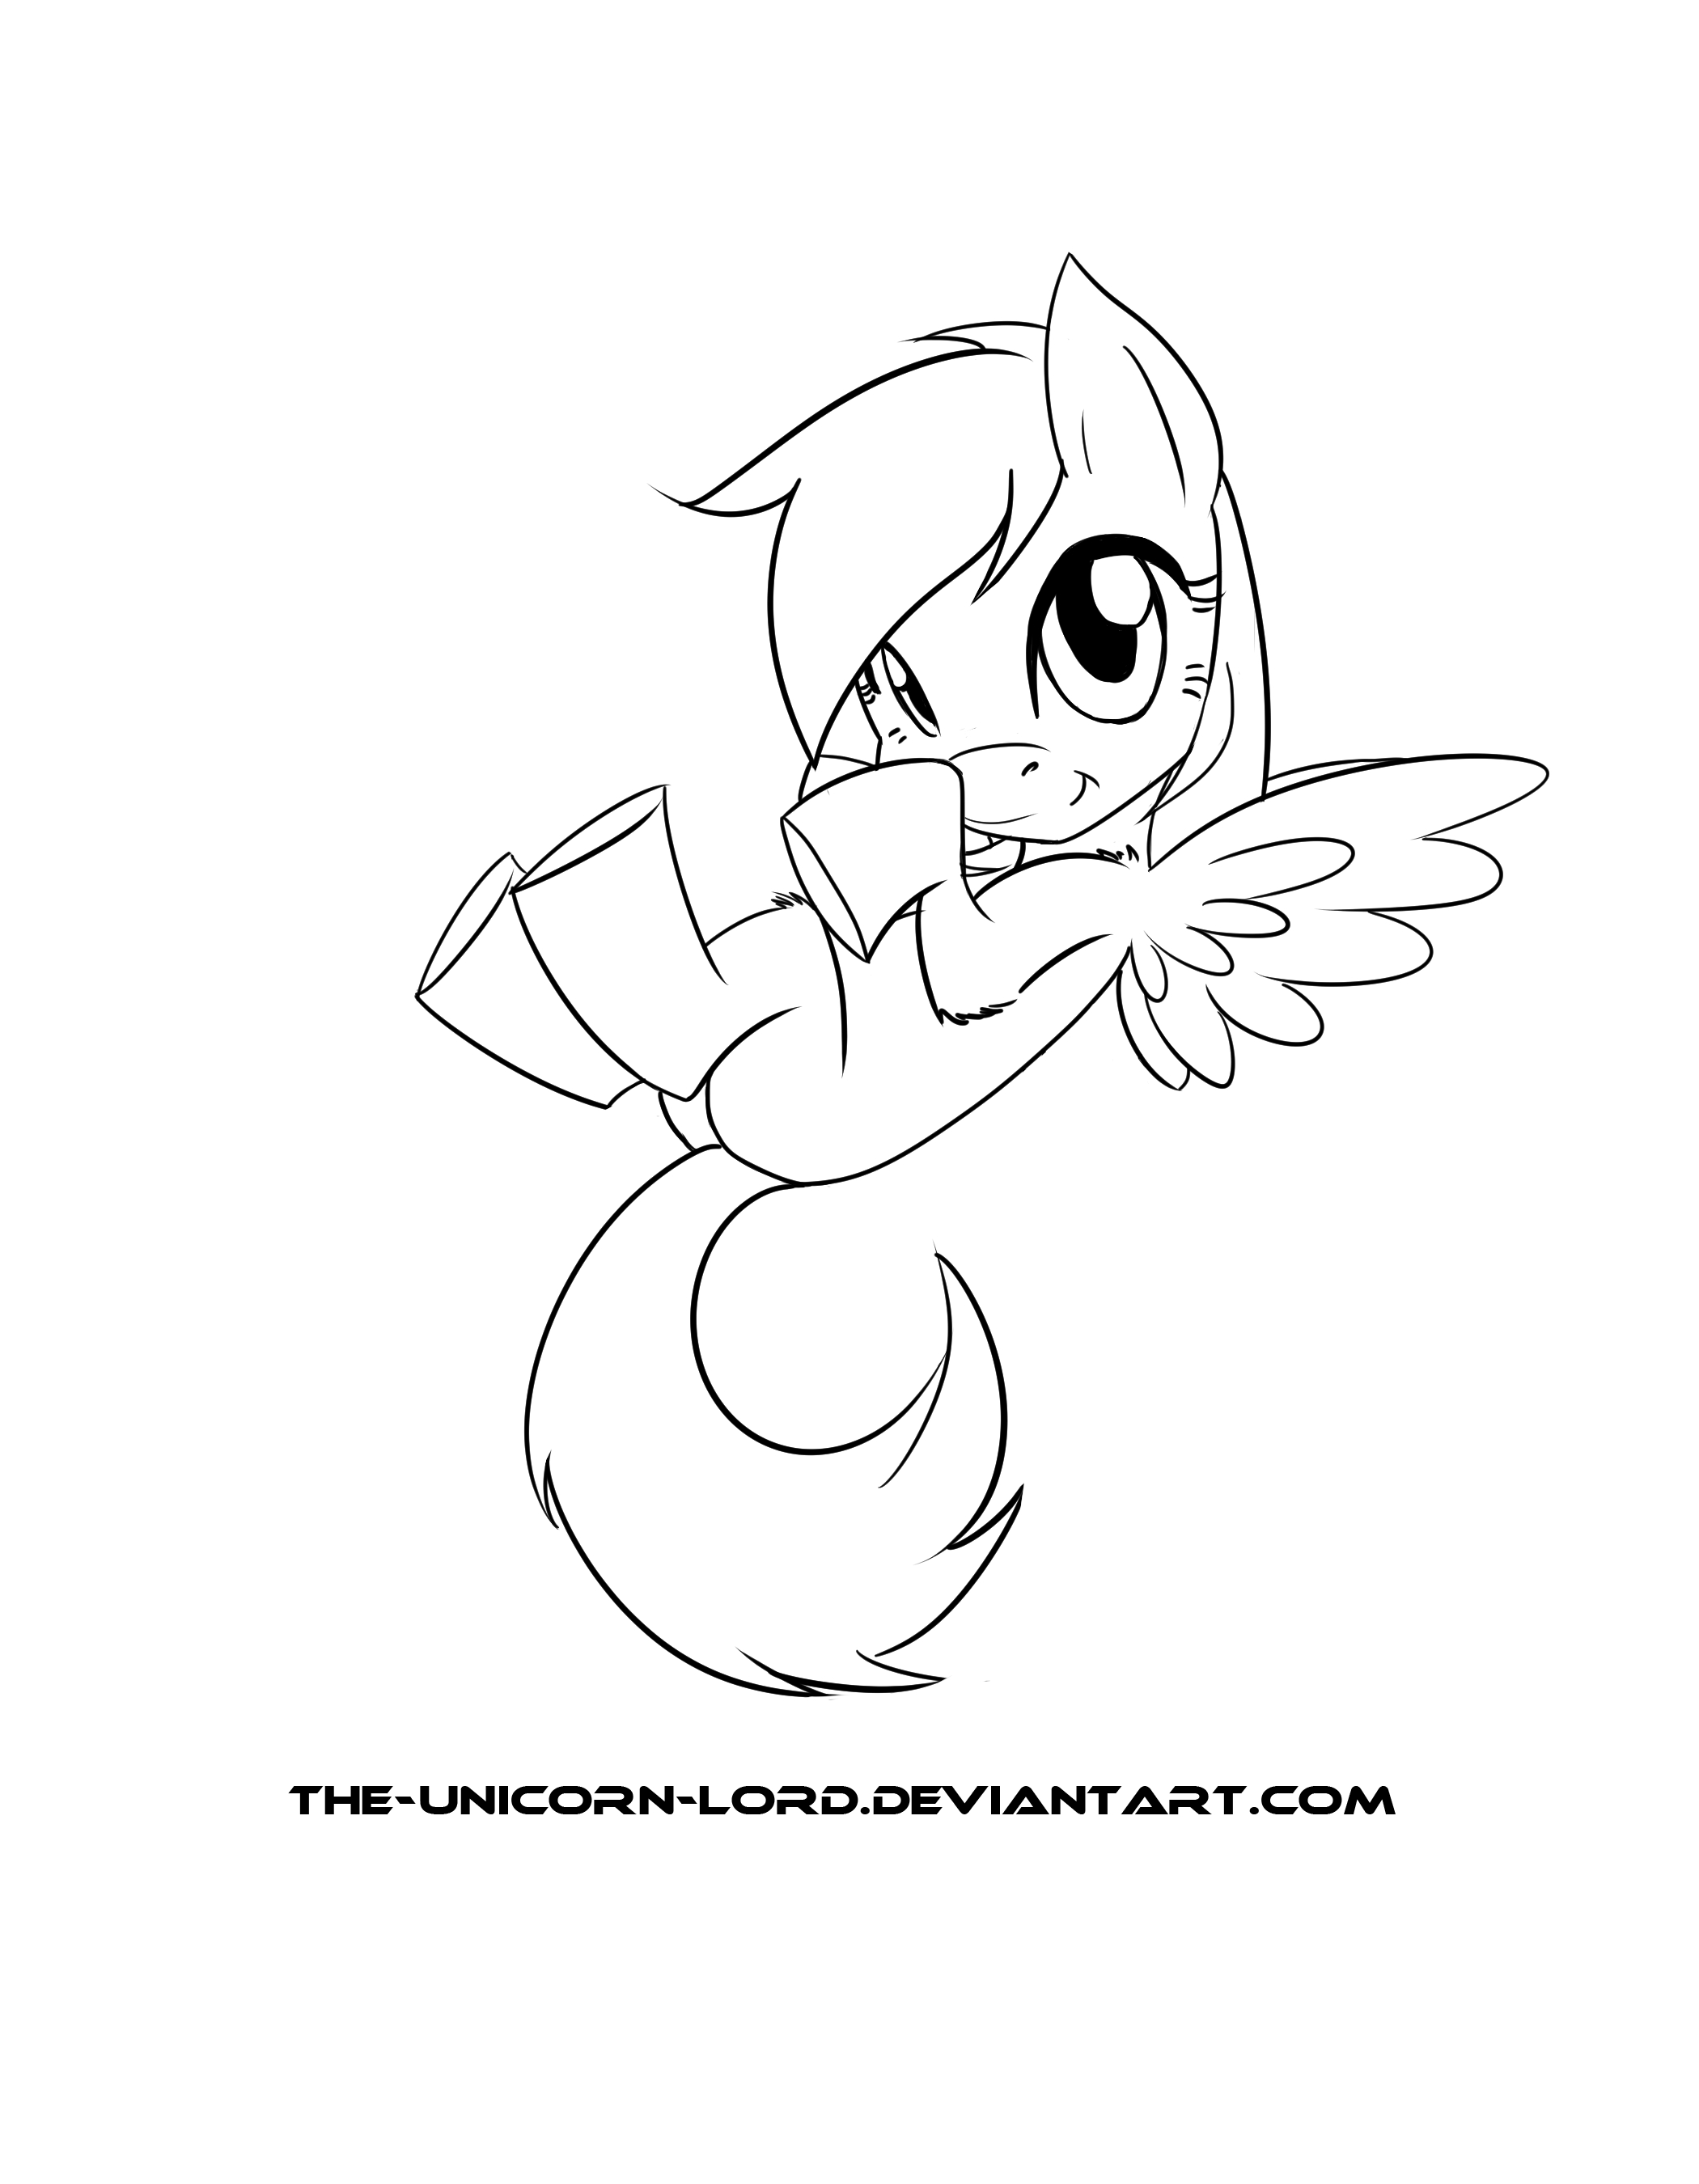 ARTIST The-Unicorn-Lord 123